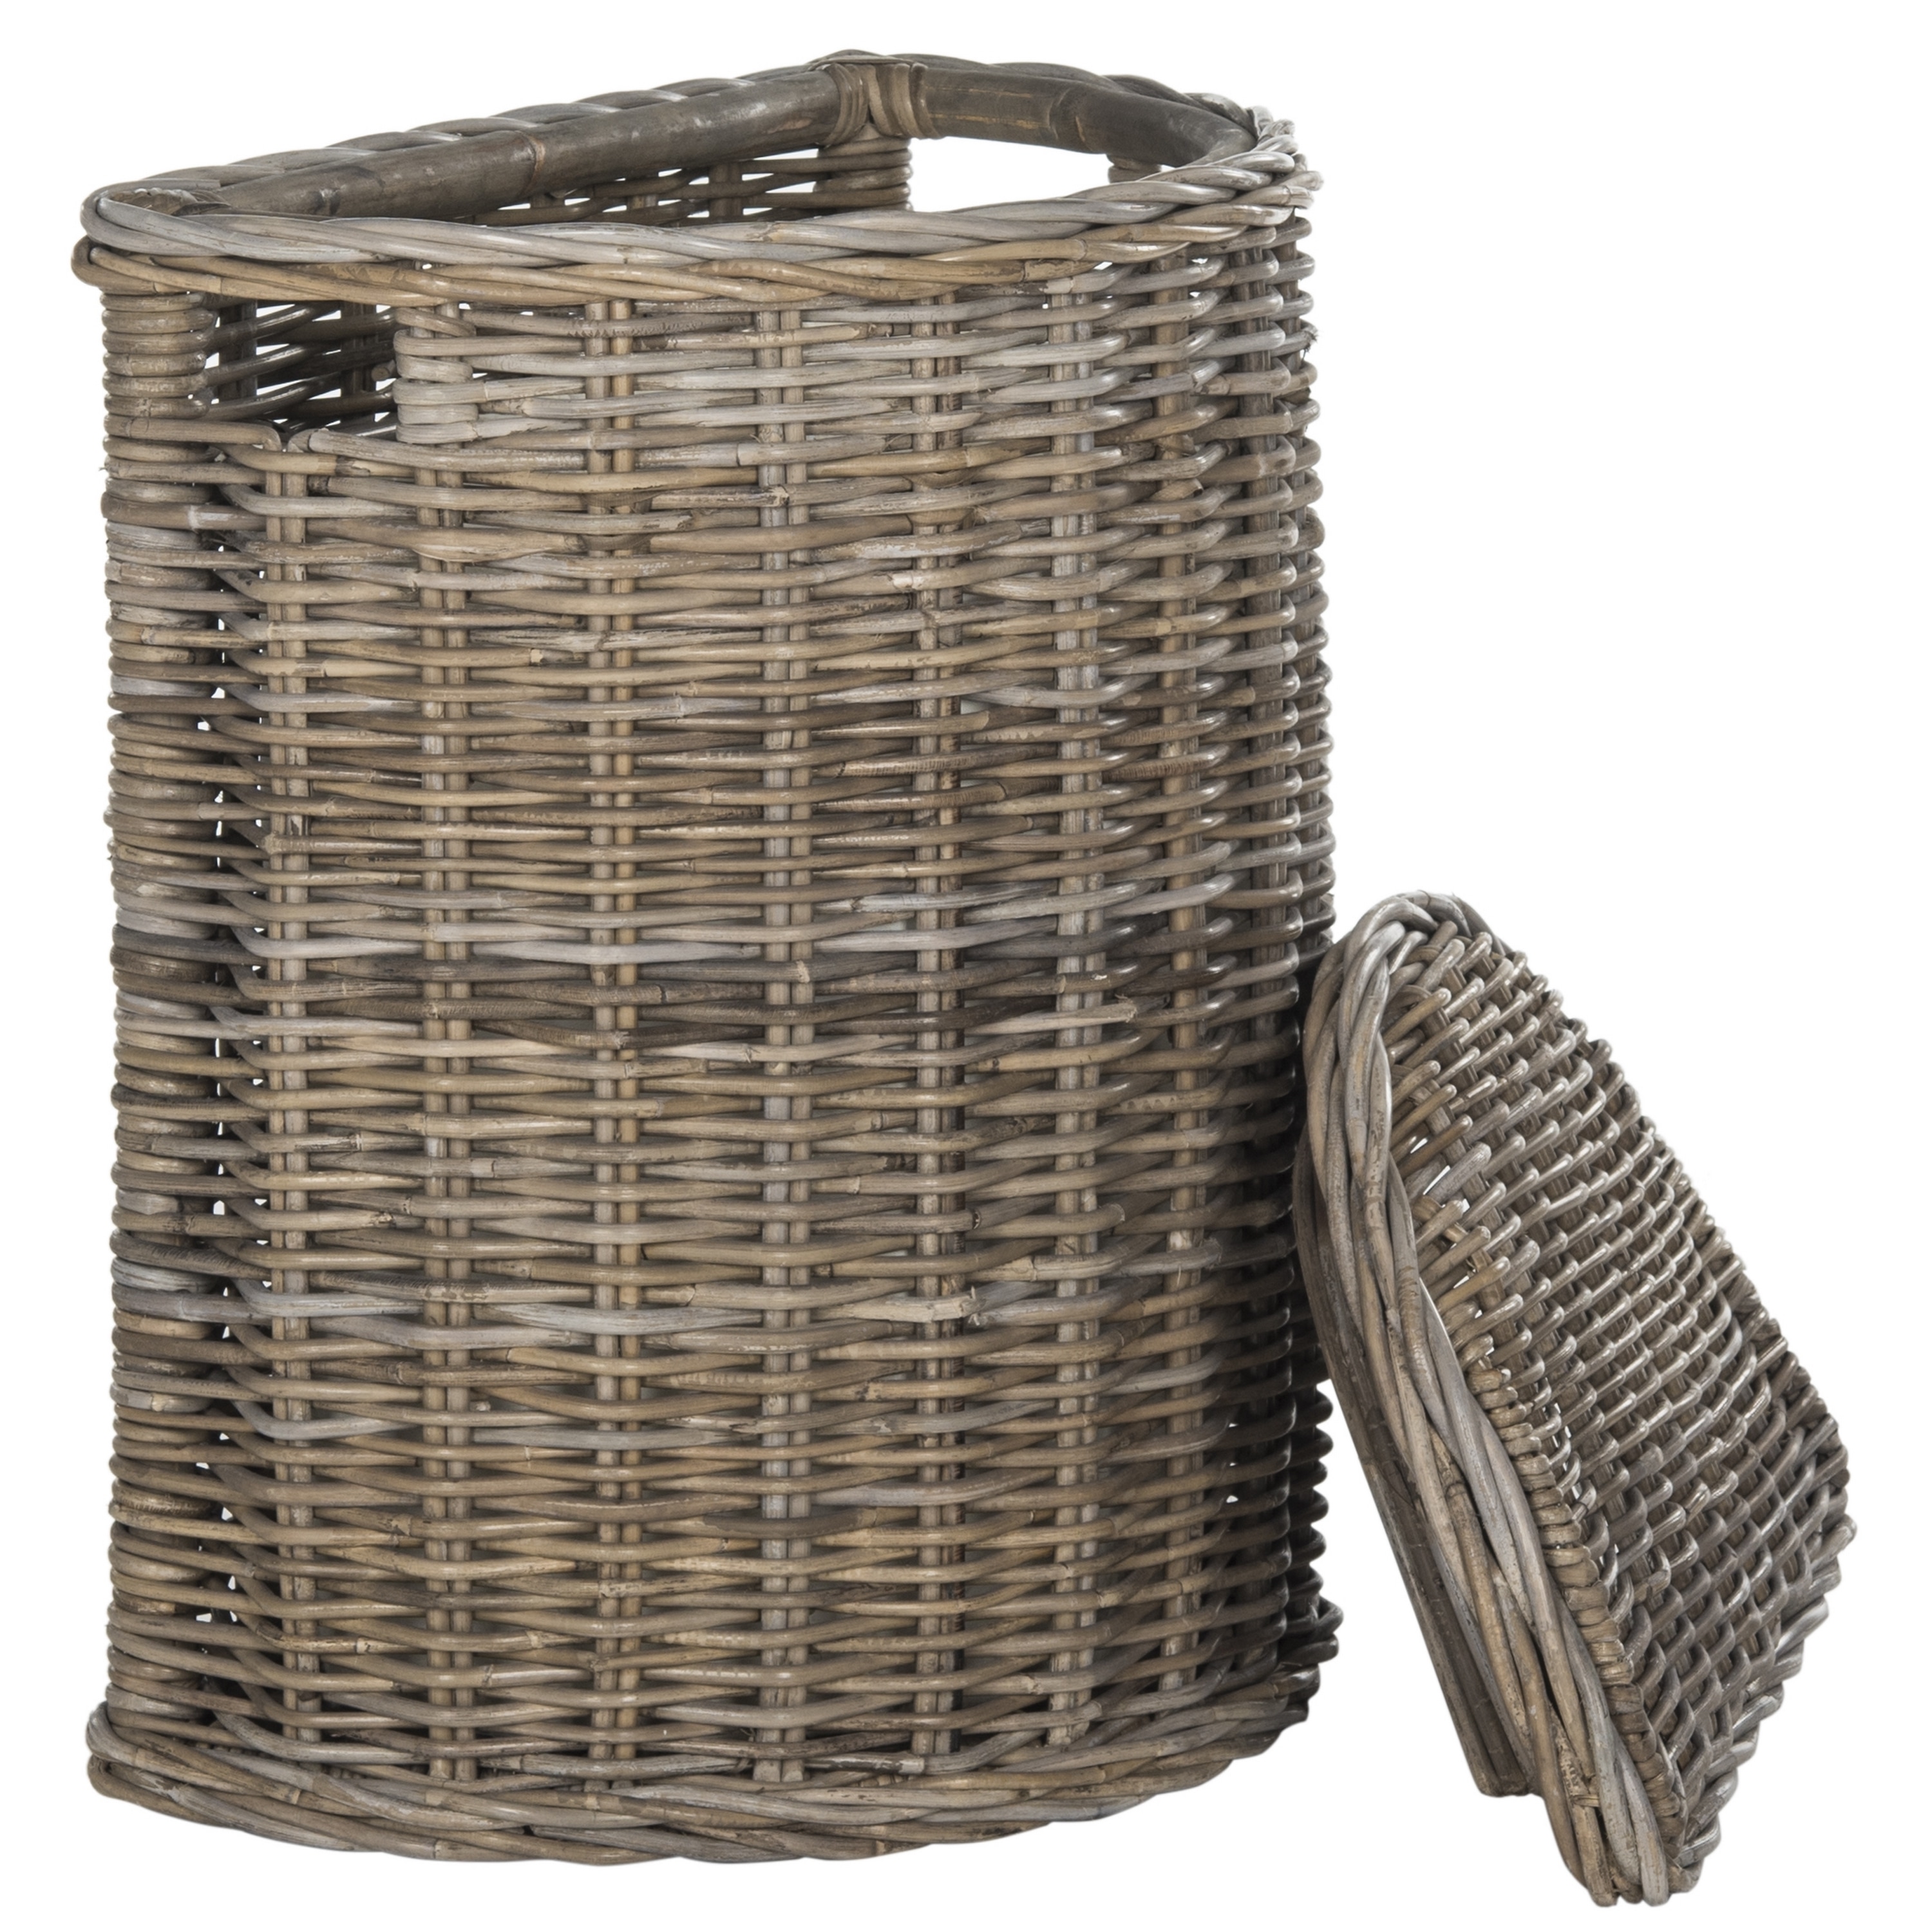 Large Grey White Hamper Basket Gift Storage Rattan Wicker With Lining Bathroom